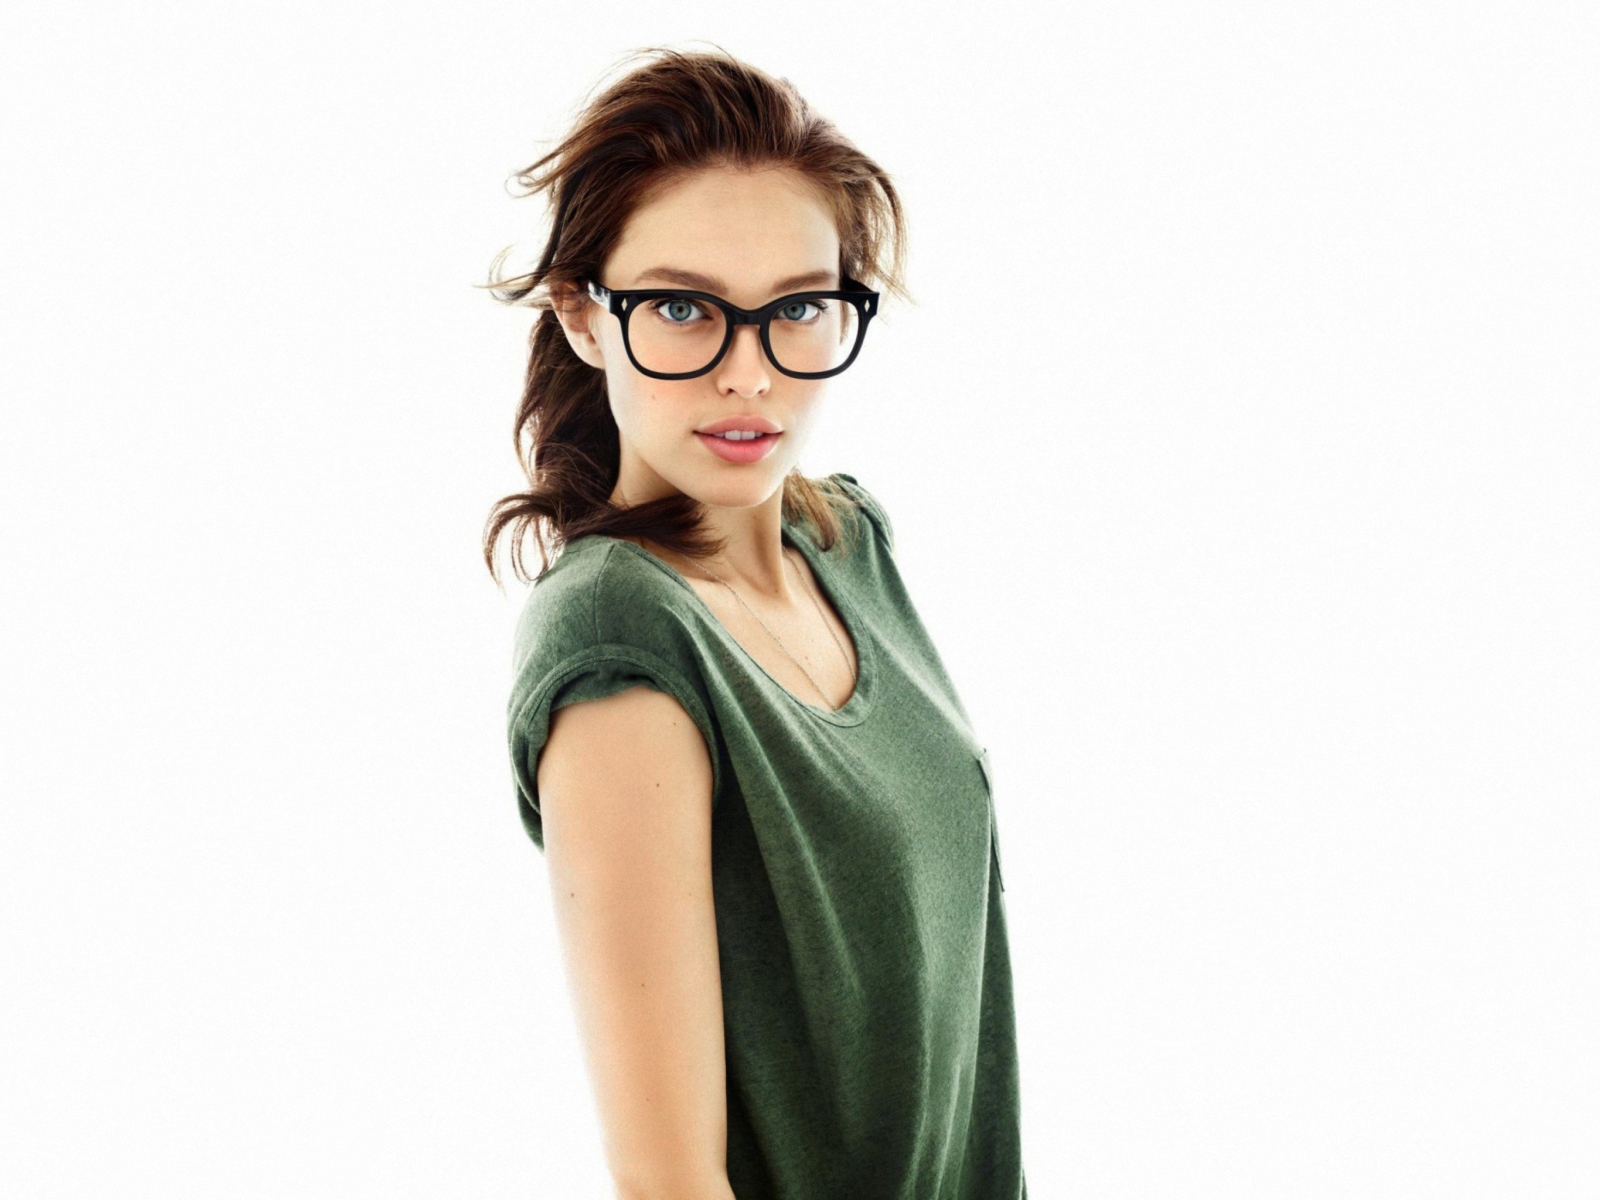 Very Cute Girl In Big Glasses wallpaper 1600x1200